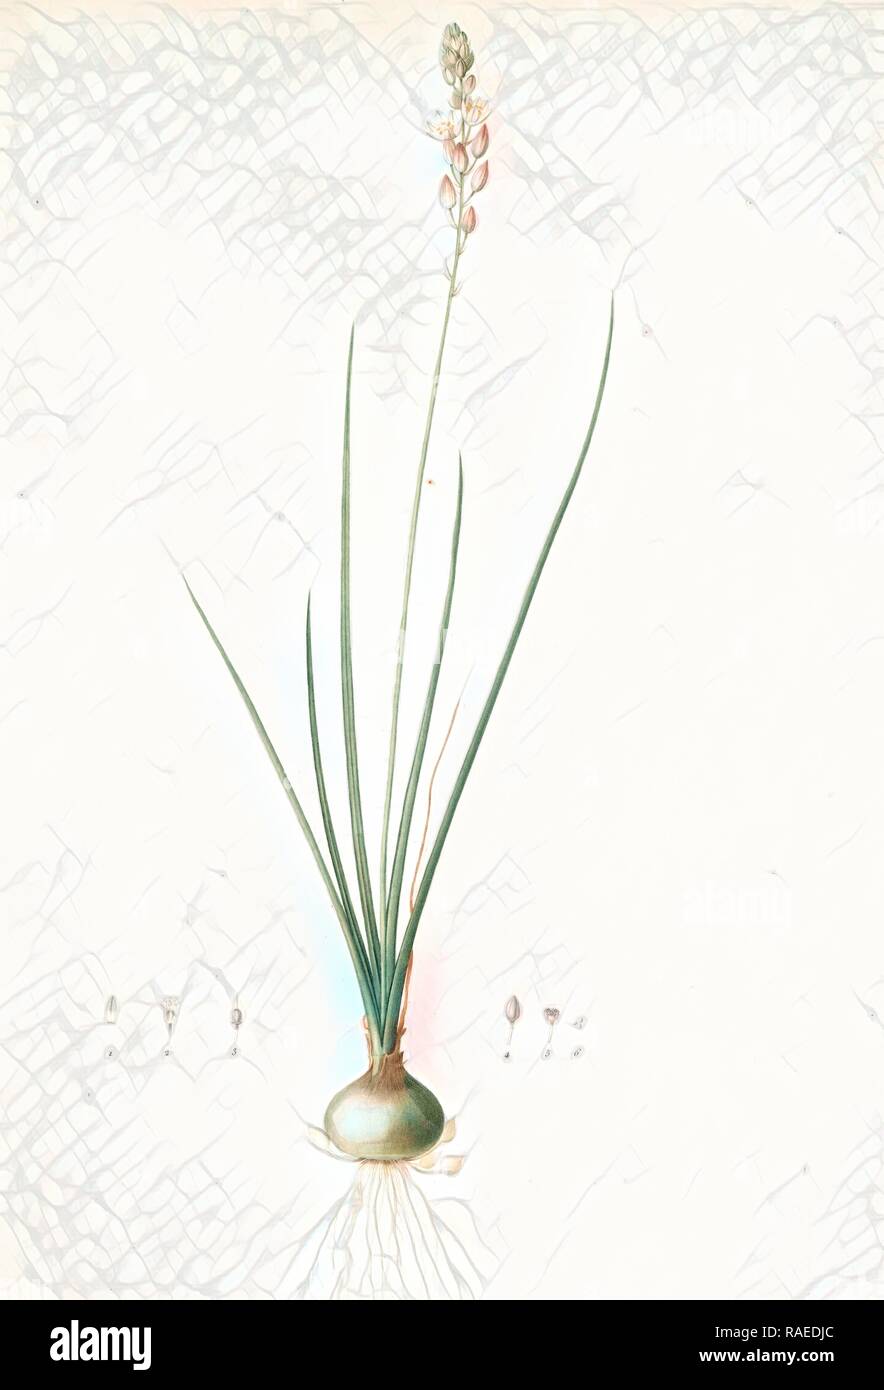 Ornithogalum tenuifolium, Ornithogalum graminifolium, Ornithogale à feuilles étroites, Rush-leaved Star of Bethlehem reimagined Stock Photo